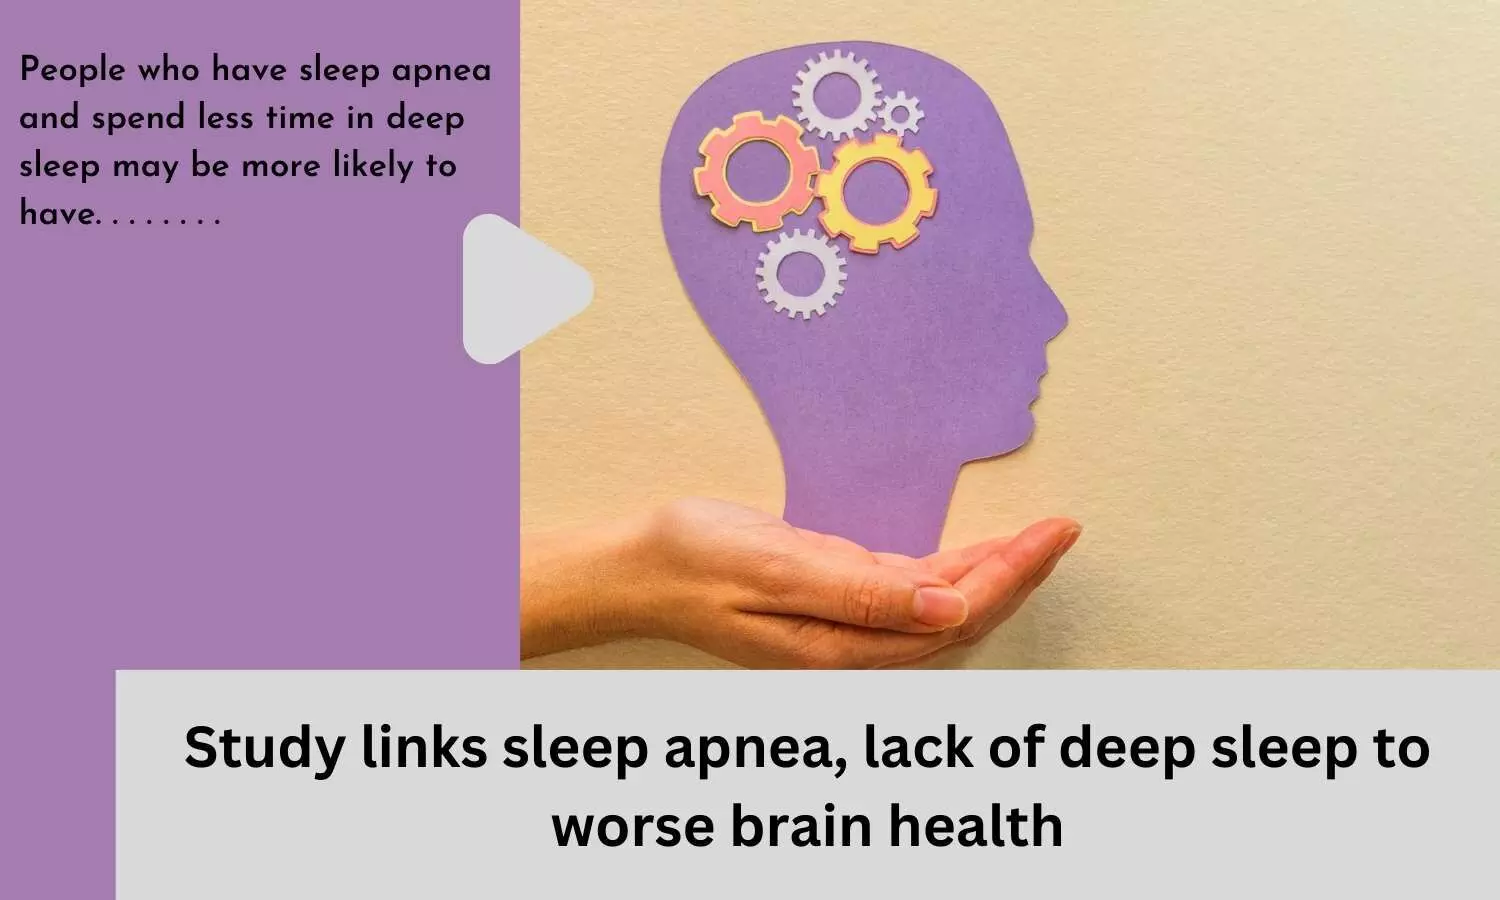 Sleep apnea and lack of deep sleep linked to worse brain health